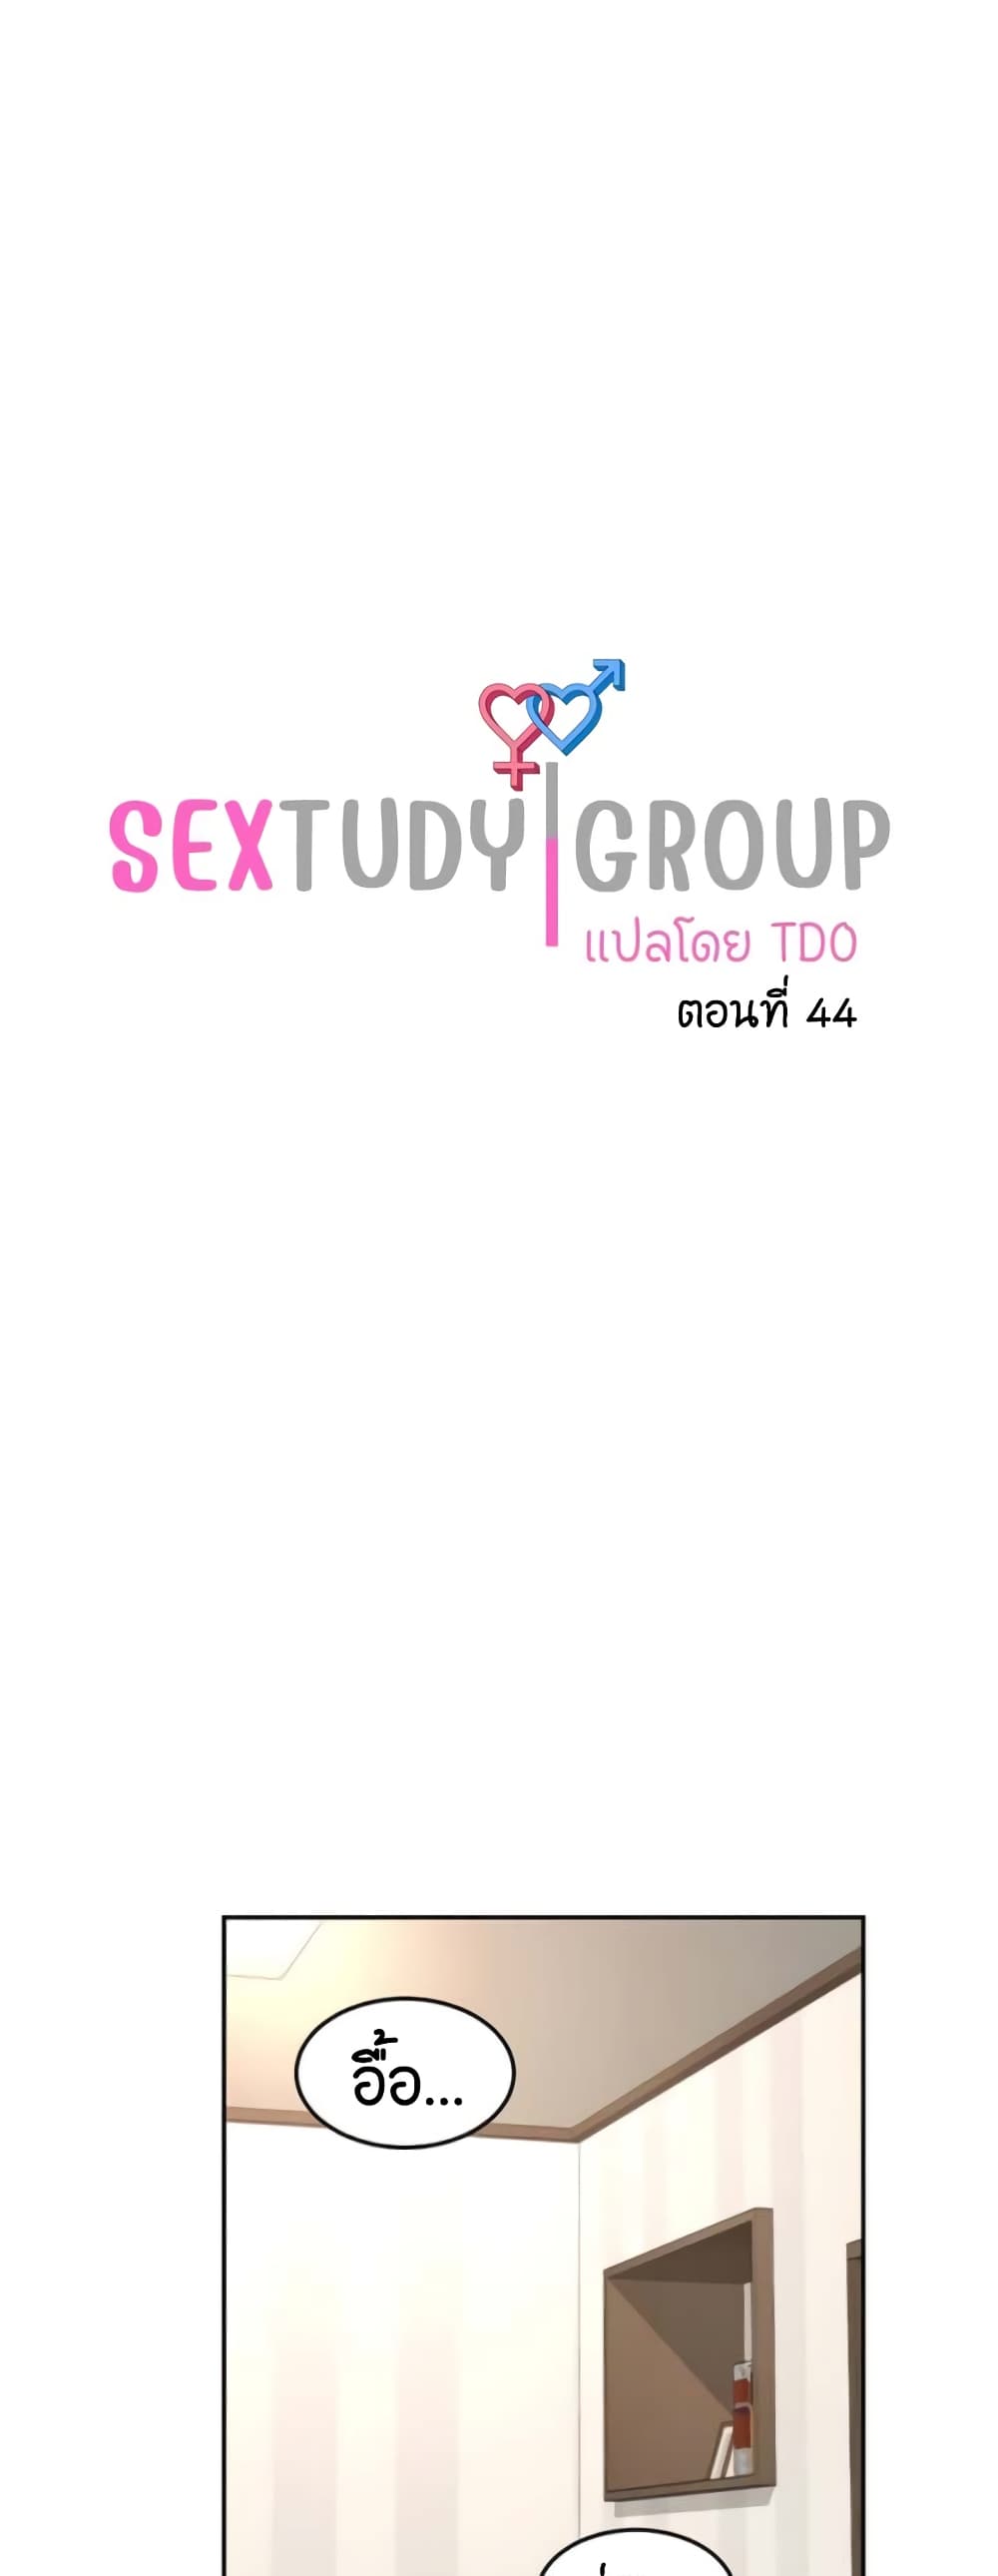 Sextudy Group 44-44